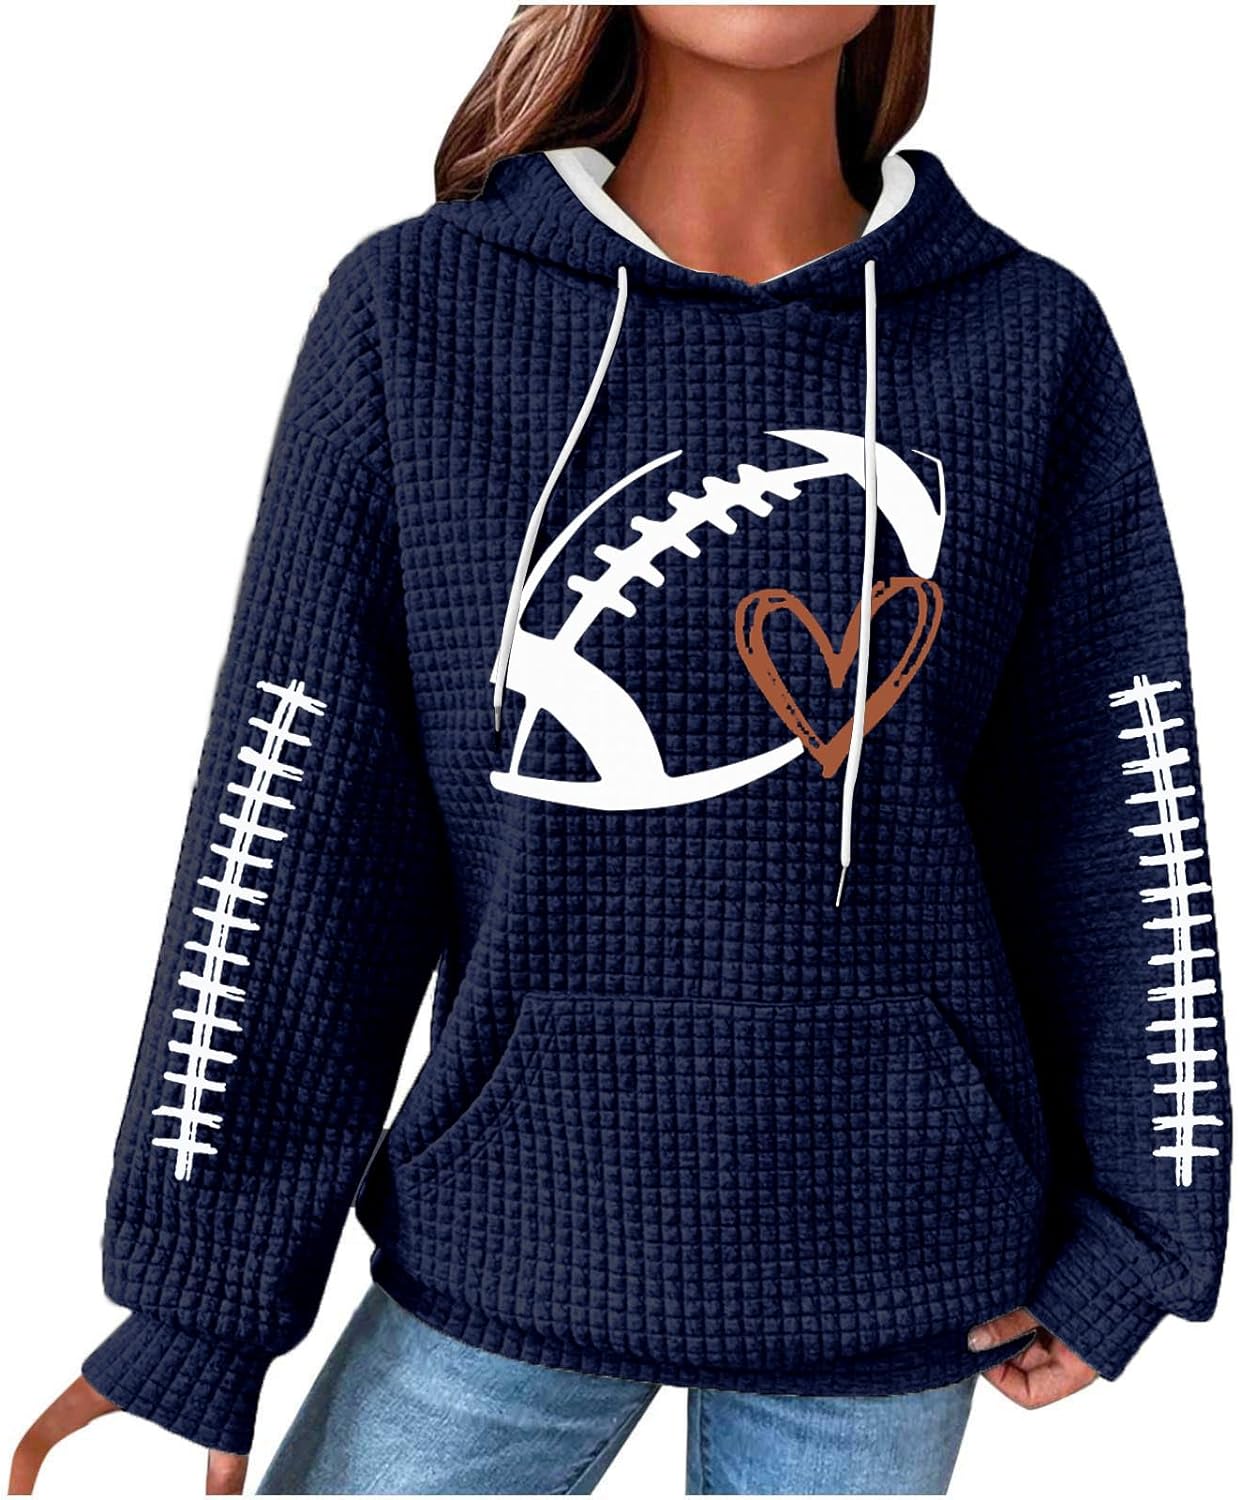 Qliuoazw Womens Football Hoodies Graphic Crewneck Oversized Sweatshirt Plus Size Casual Pullover Long Sleeve Fall Clothes